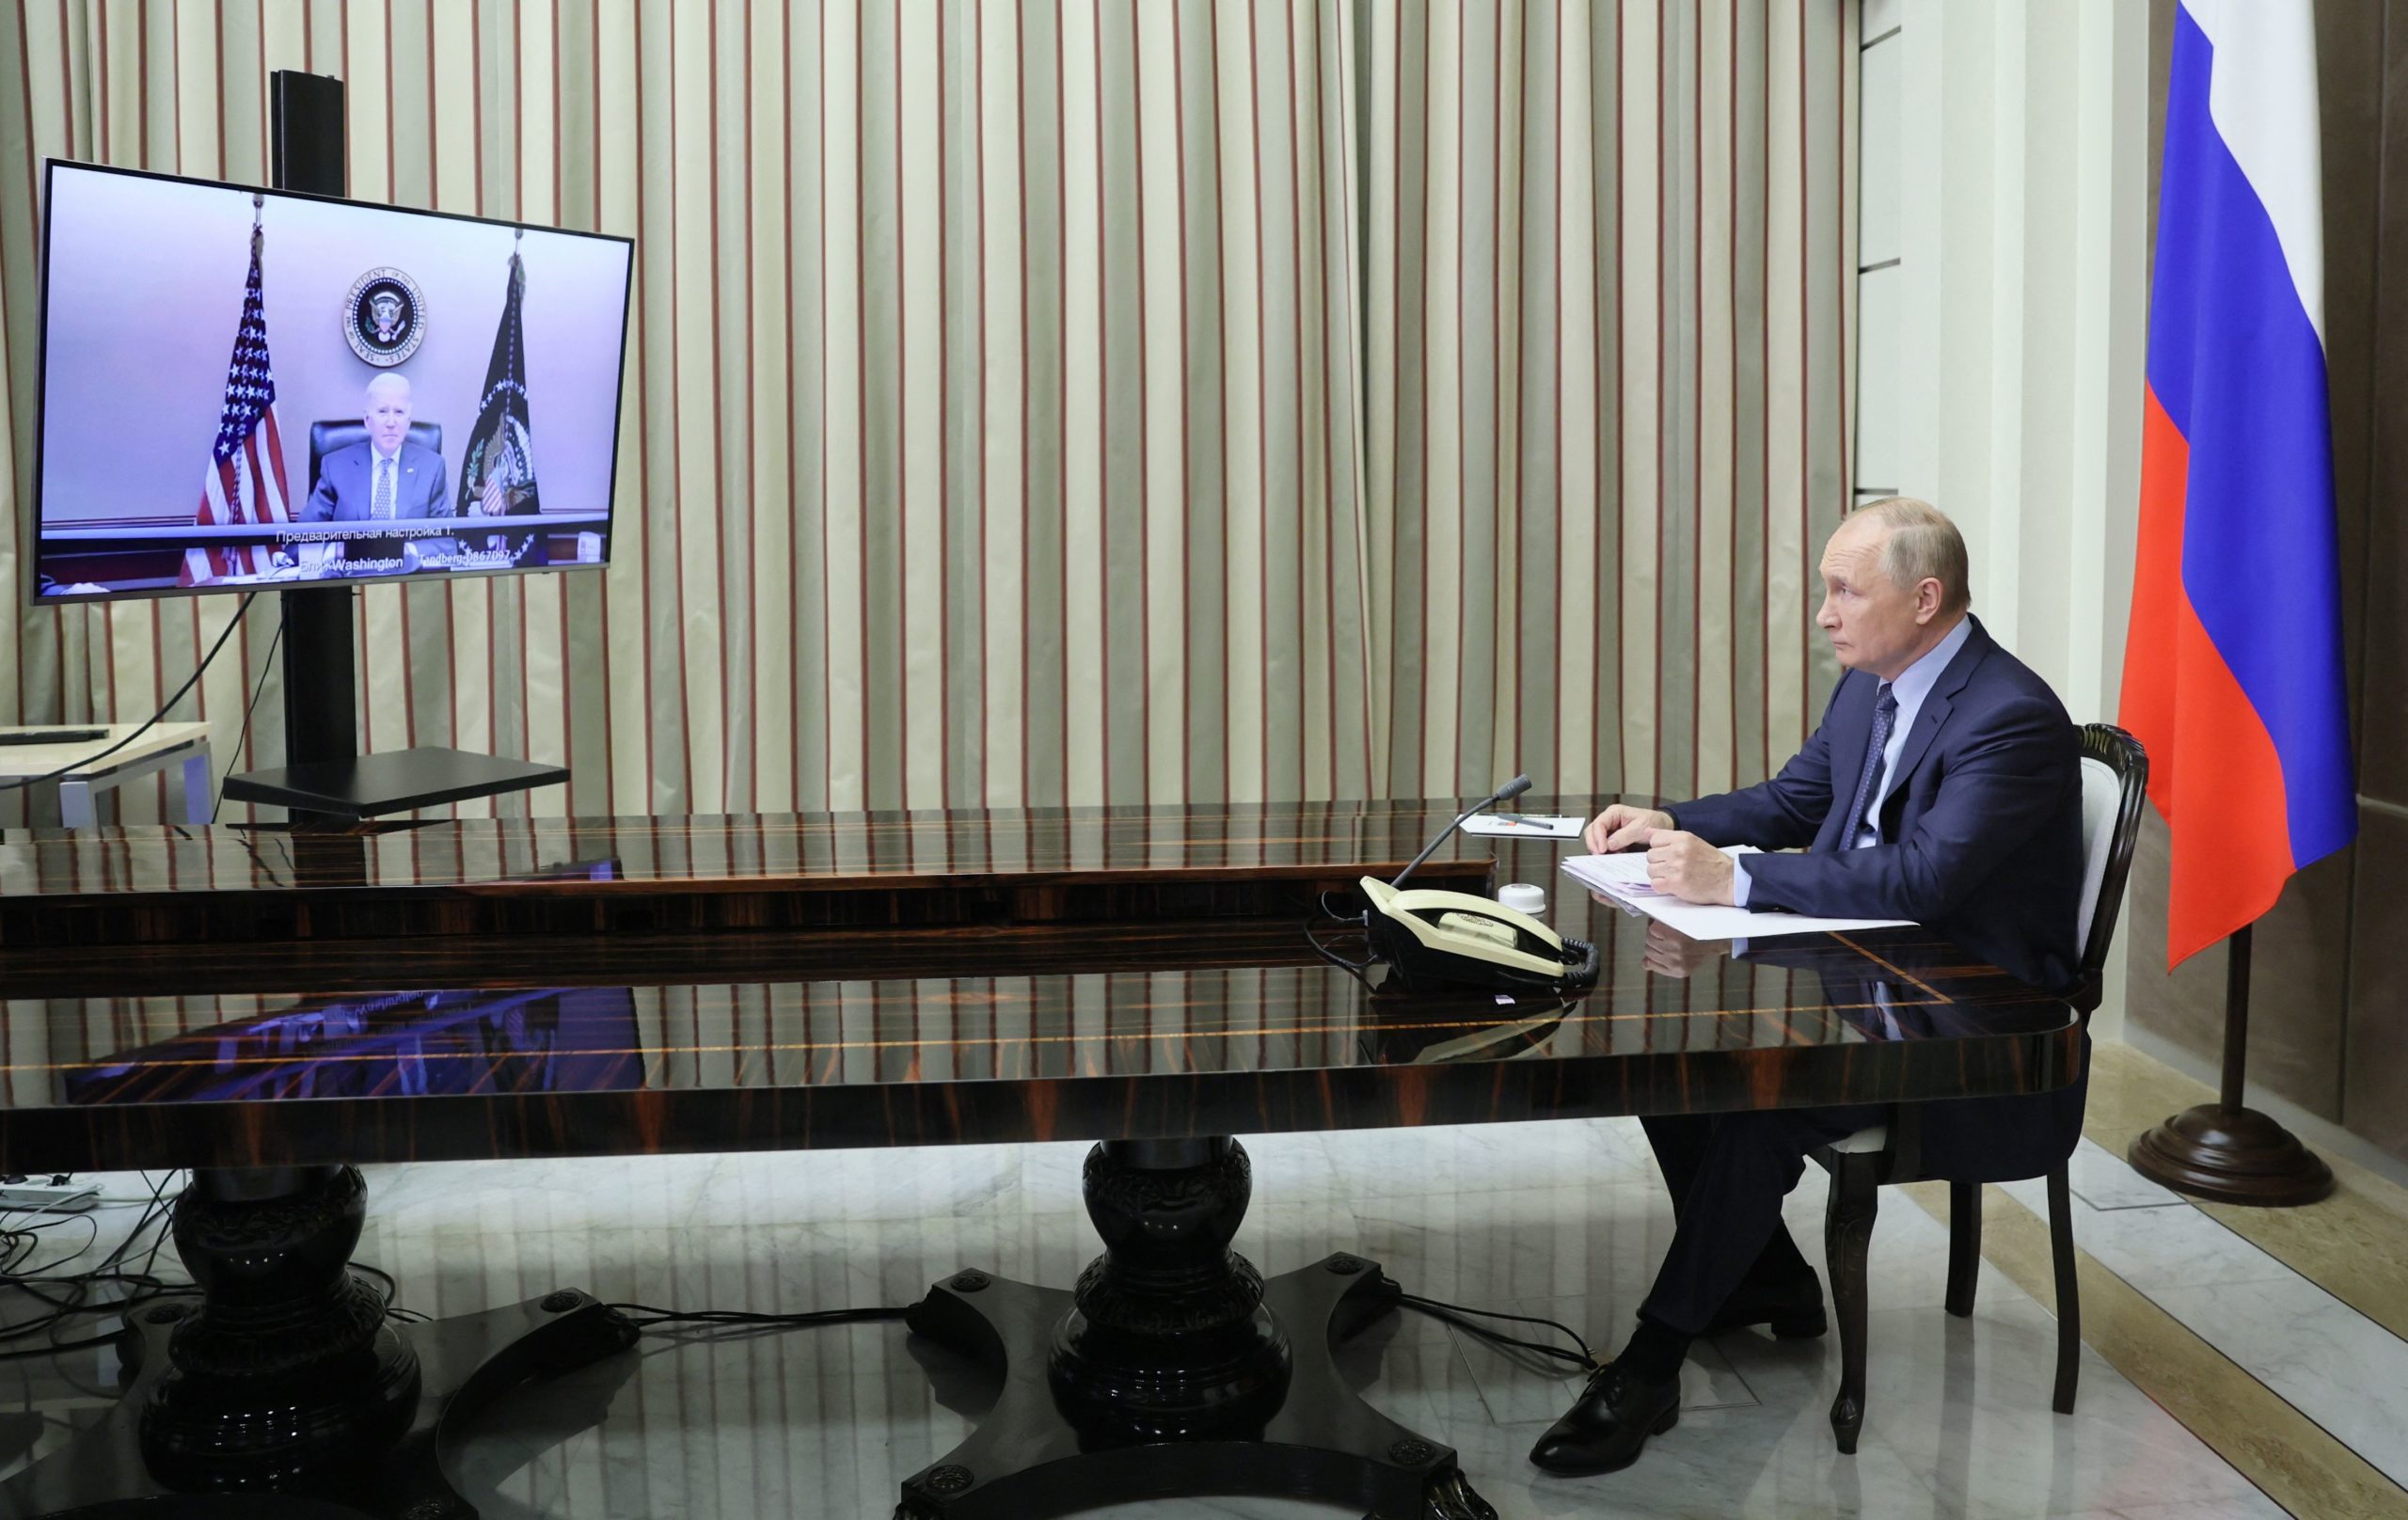 Russian President Vladimir Putin attends a virtual meeting with President Joe Biden on Dec. 7. (Mikhail Metzel/Sputnik/AFP via Getty Images)